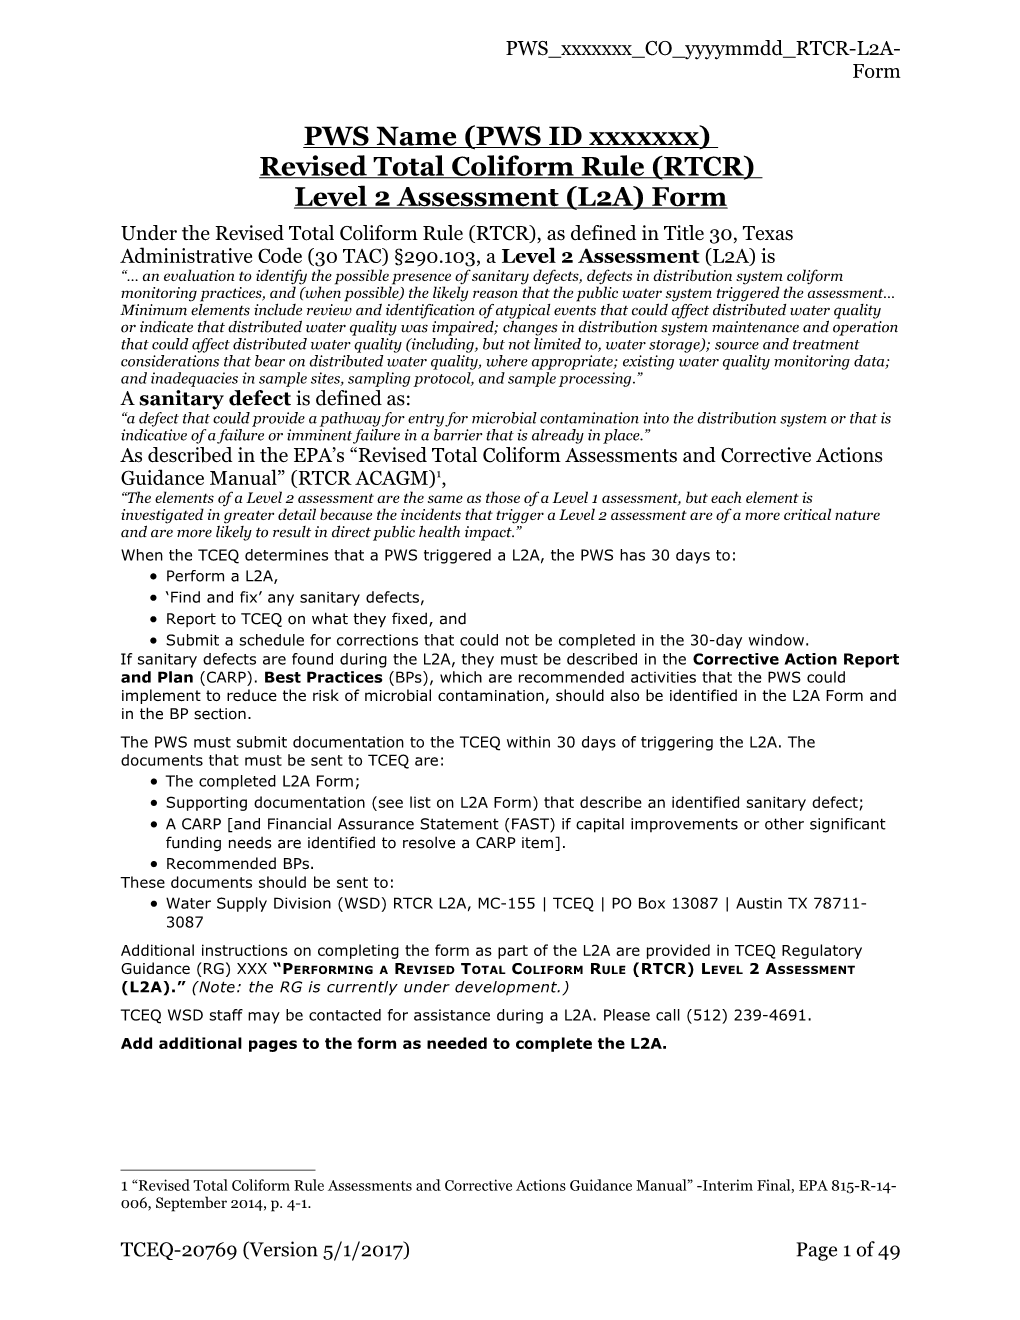 RTCR Level-2-Form 20151109.Xlsx